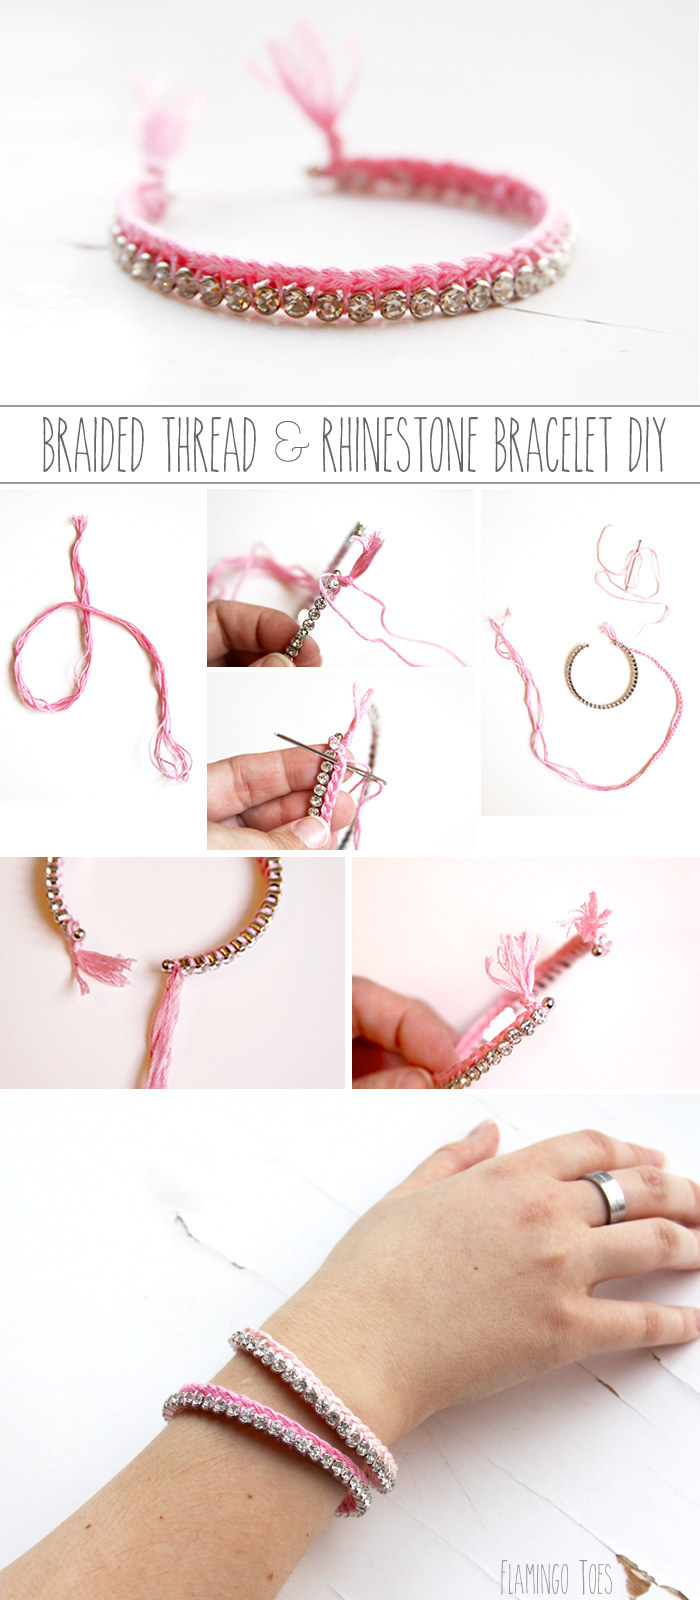 DIY Bracelet Ideas for Men  Boys  How To Make Bracelets  Thread Bracelet   Creationyou  YouTube